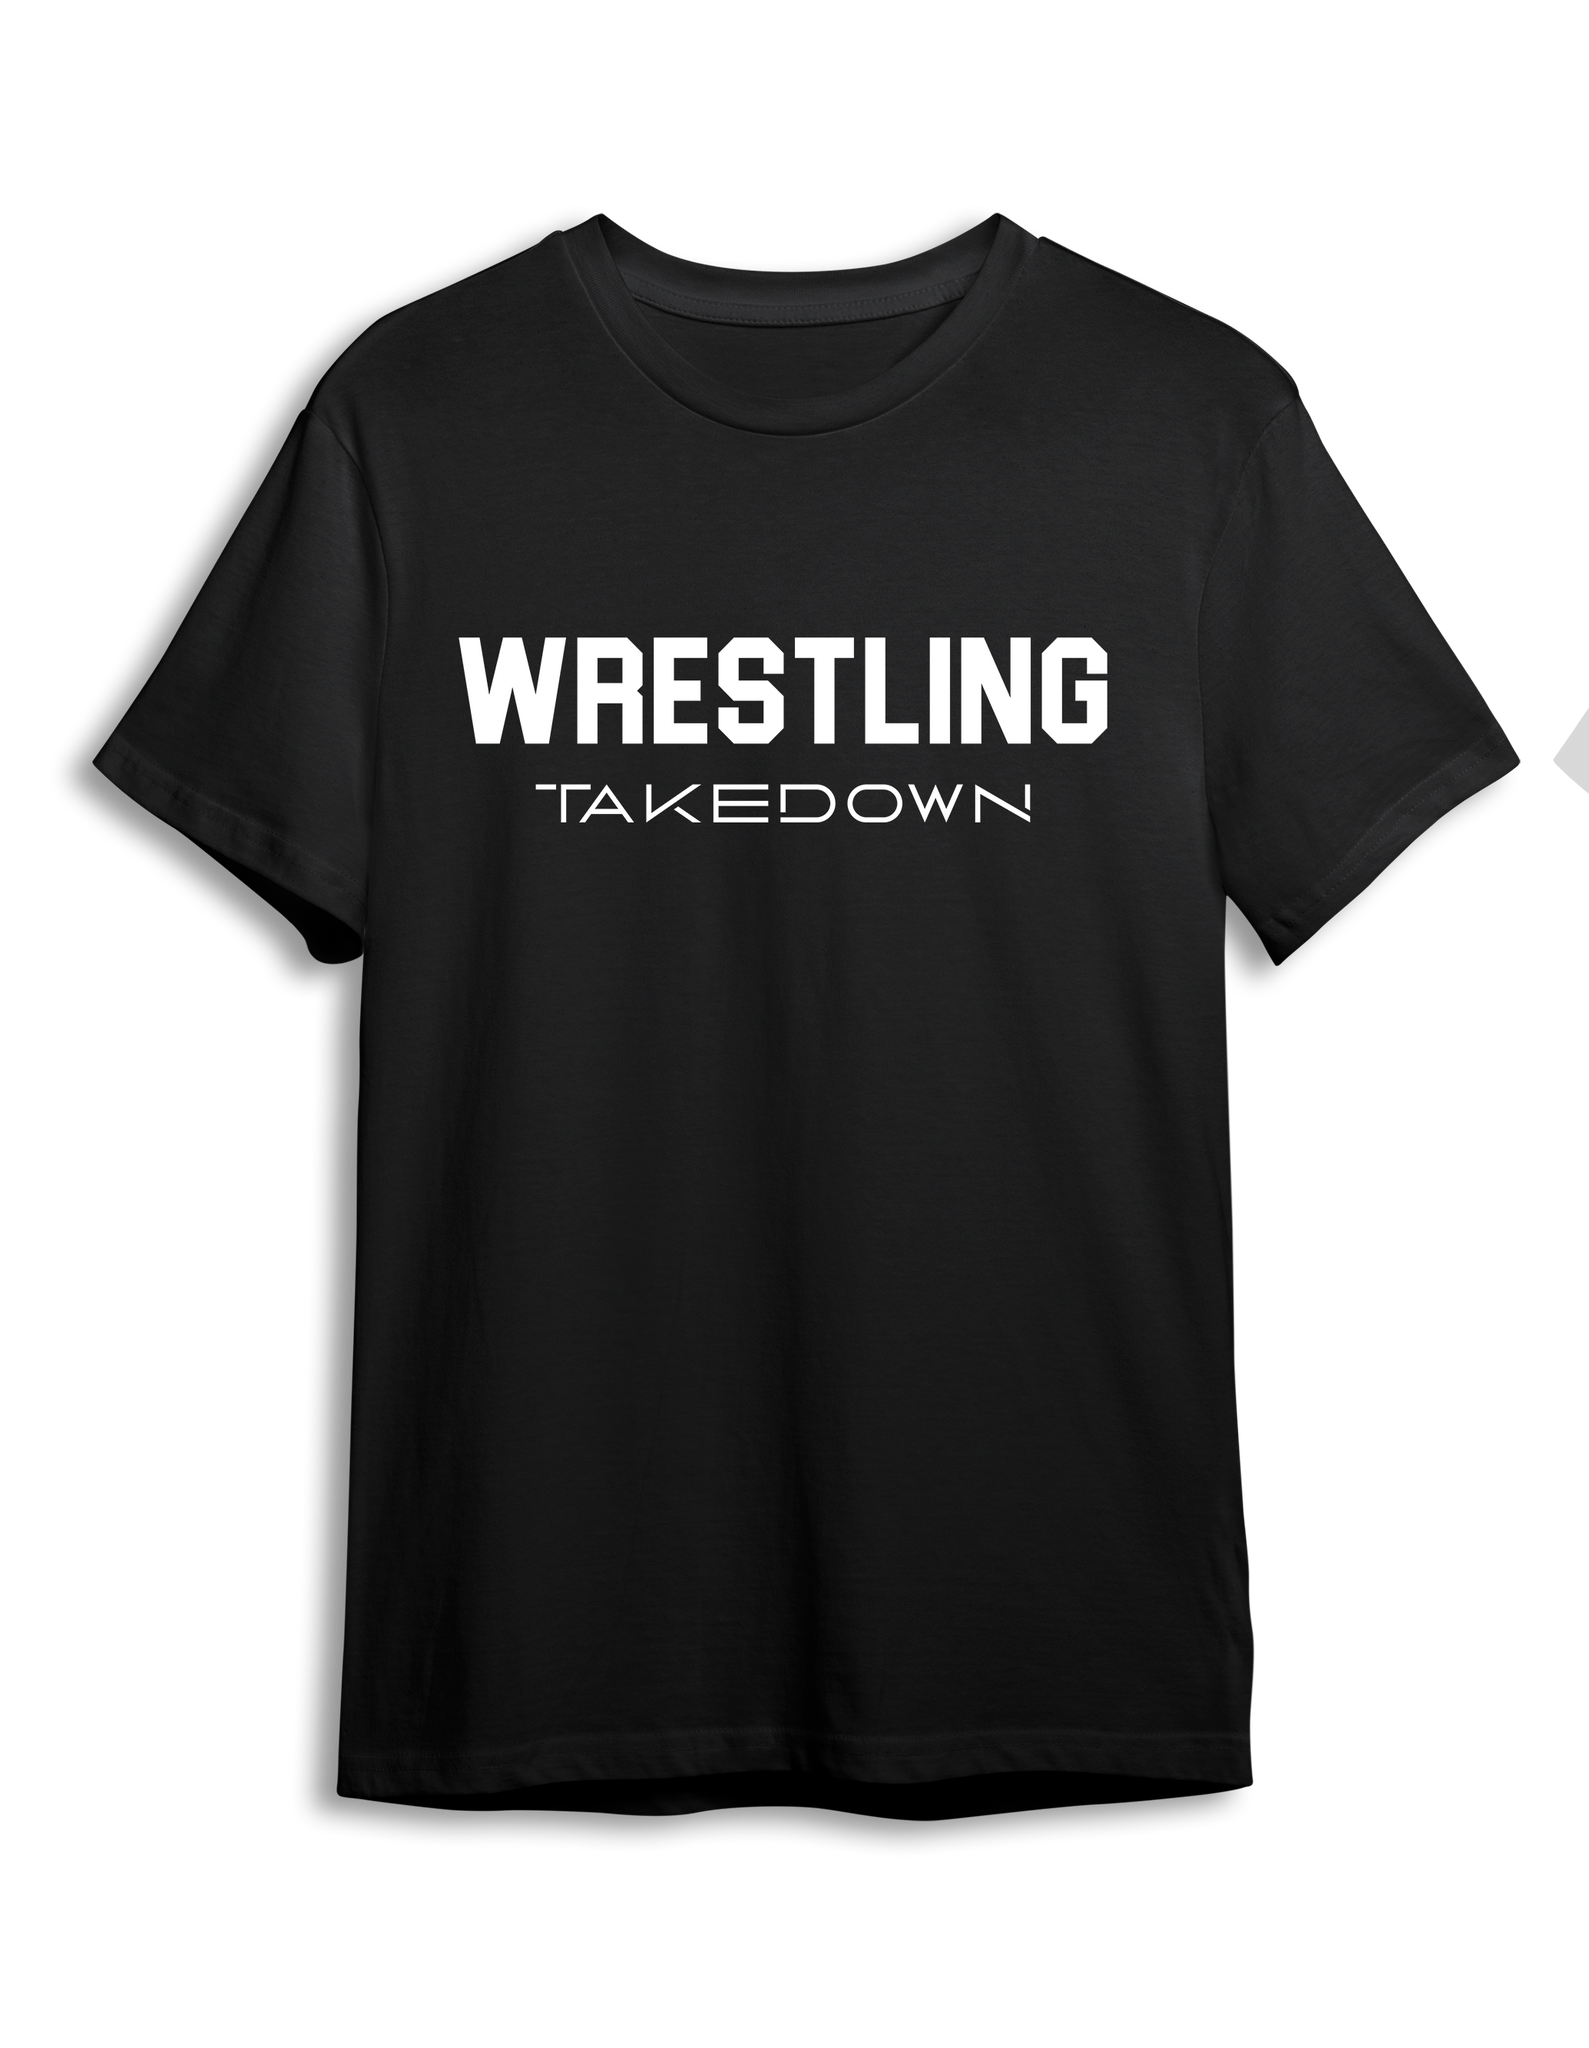 Wrestling Basic Graphic T-Shirt